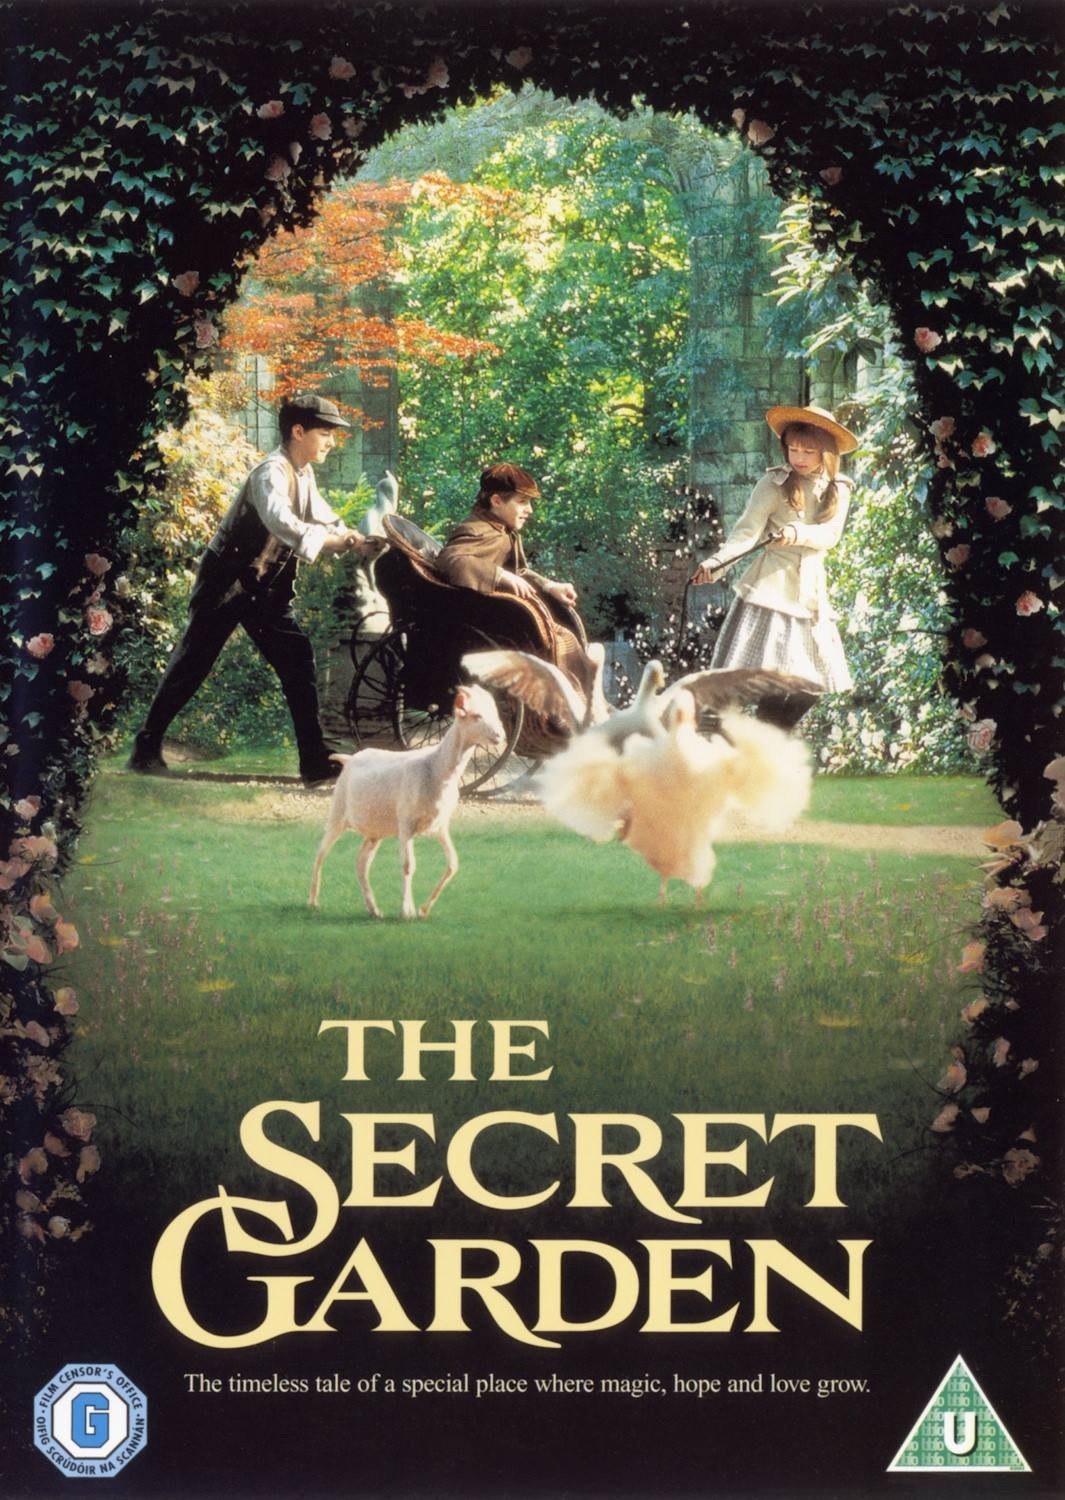 the-secret-garden-book-cover.jpg